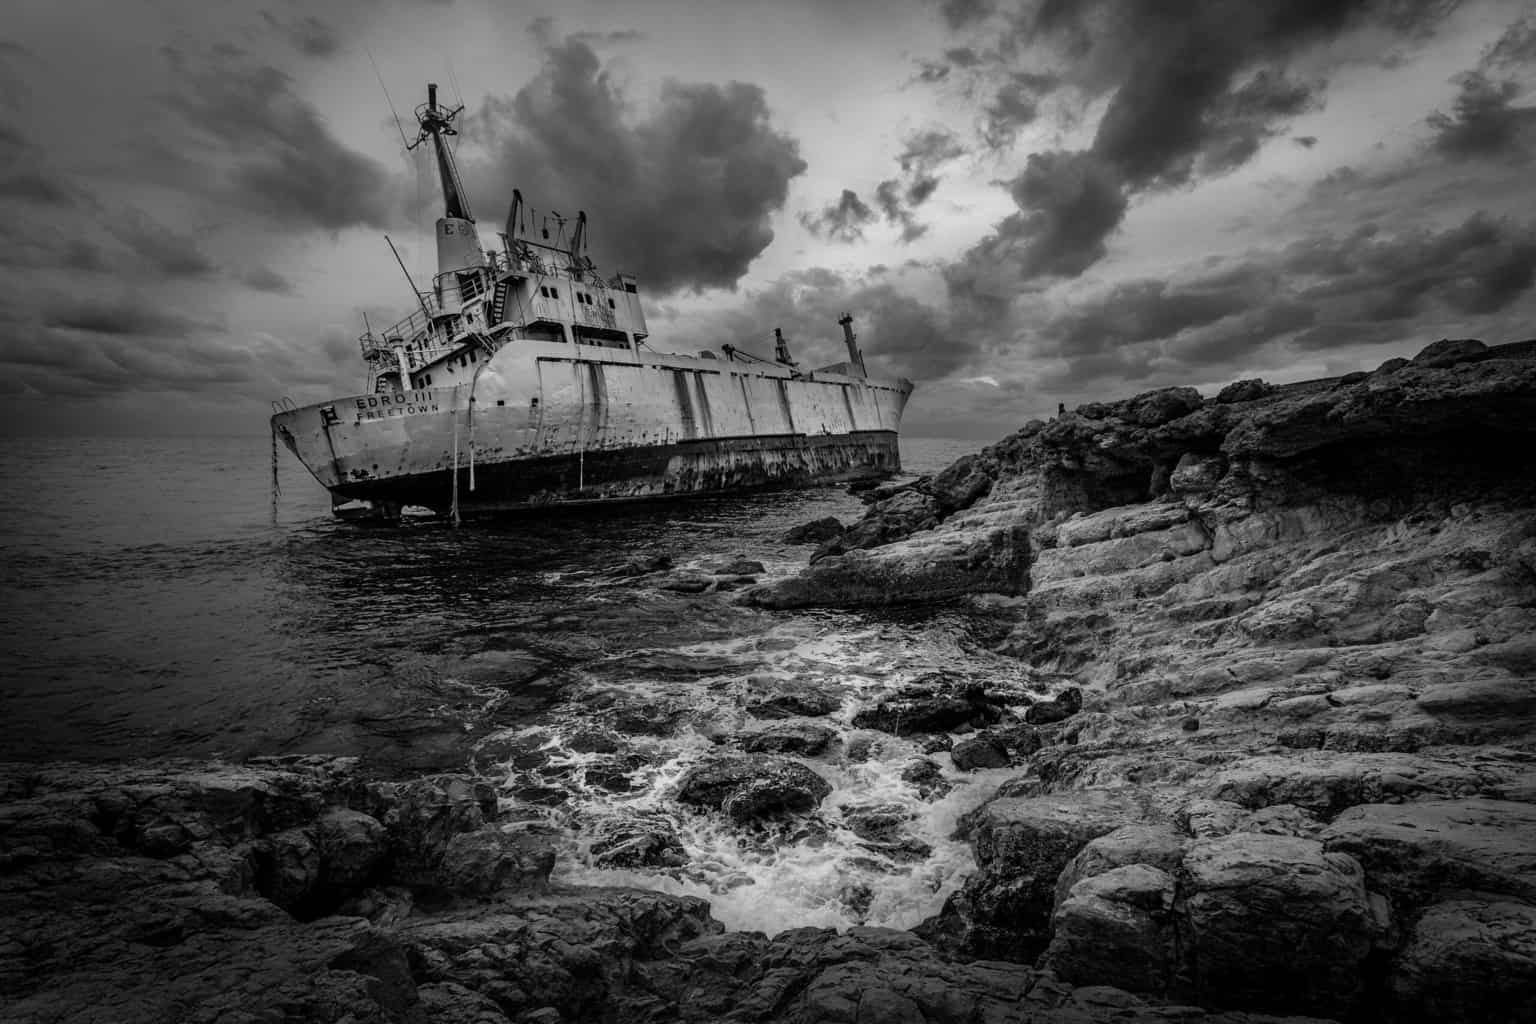  Shipwreck, Cyprus - black and white conversion using Nik Sikver Efex Pro 